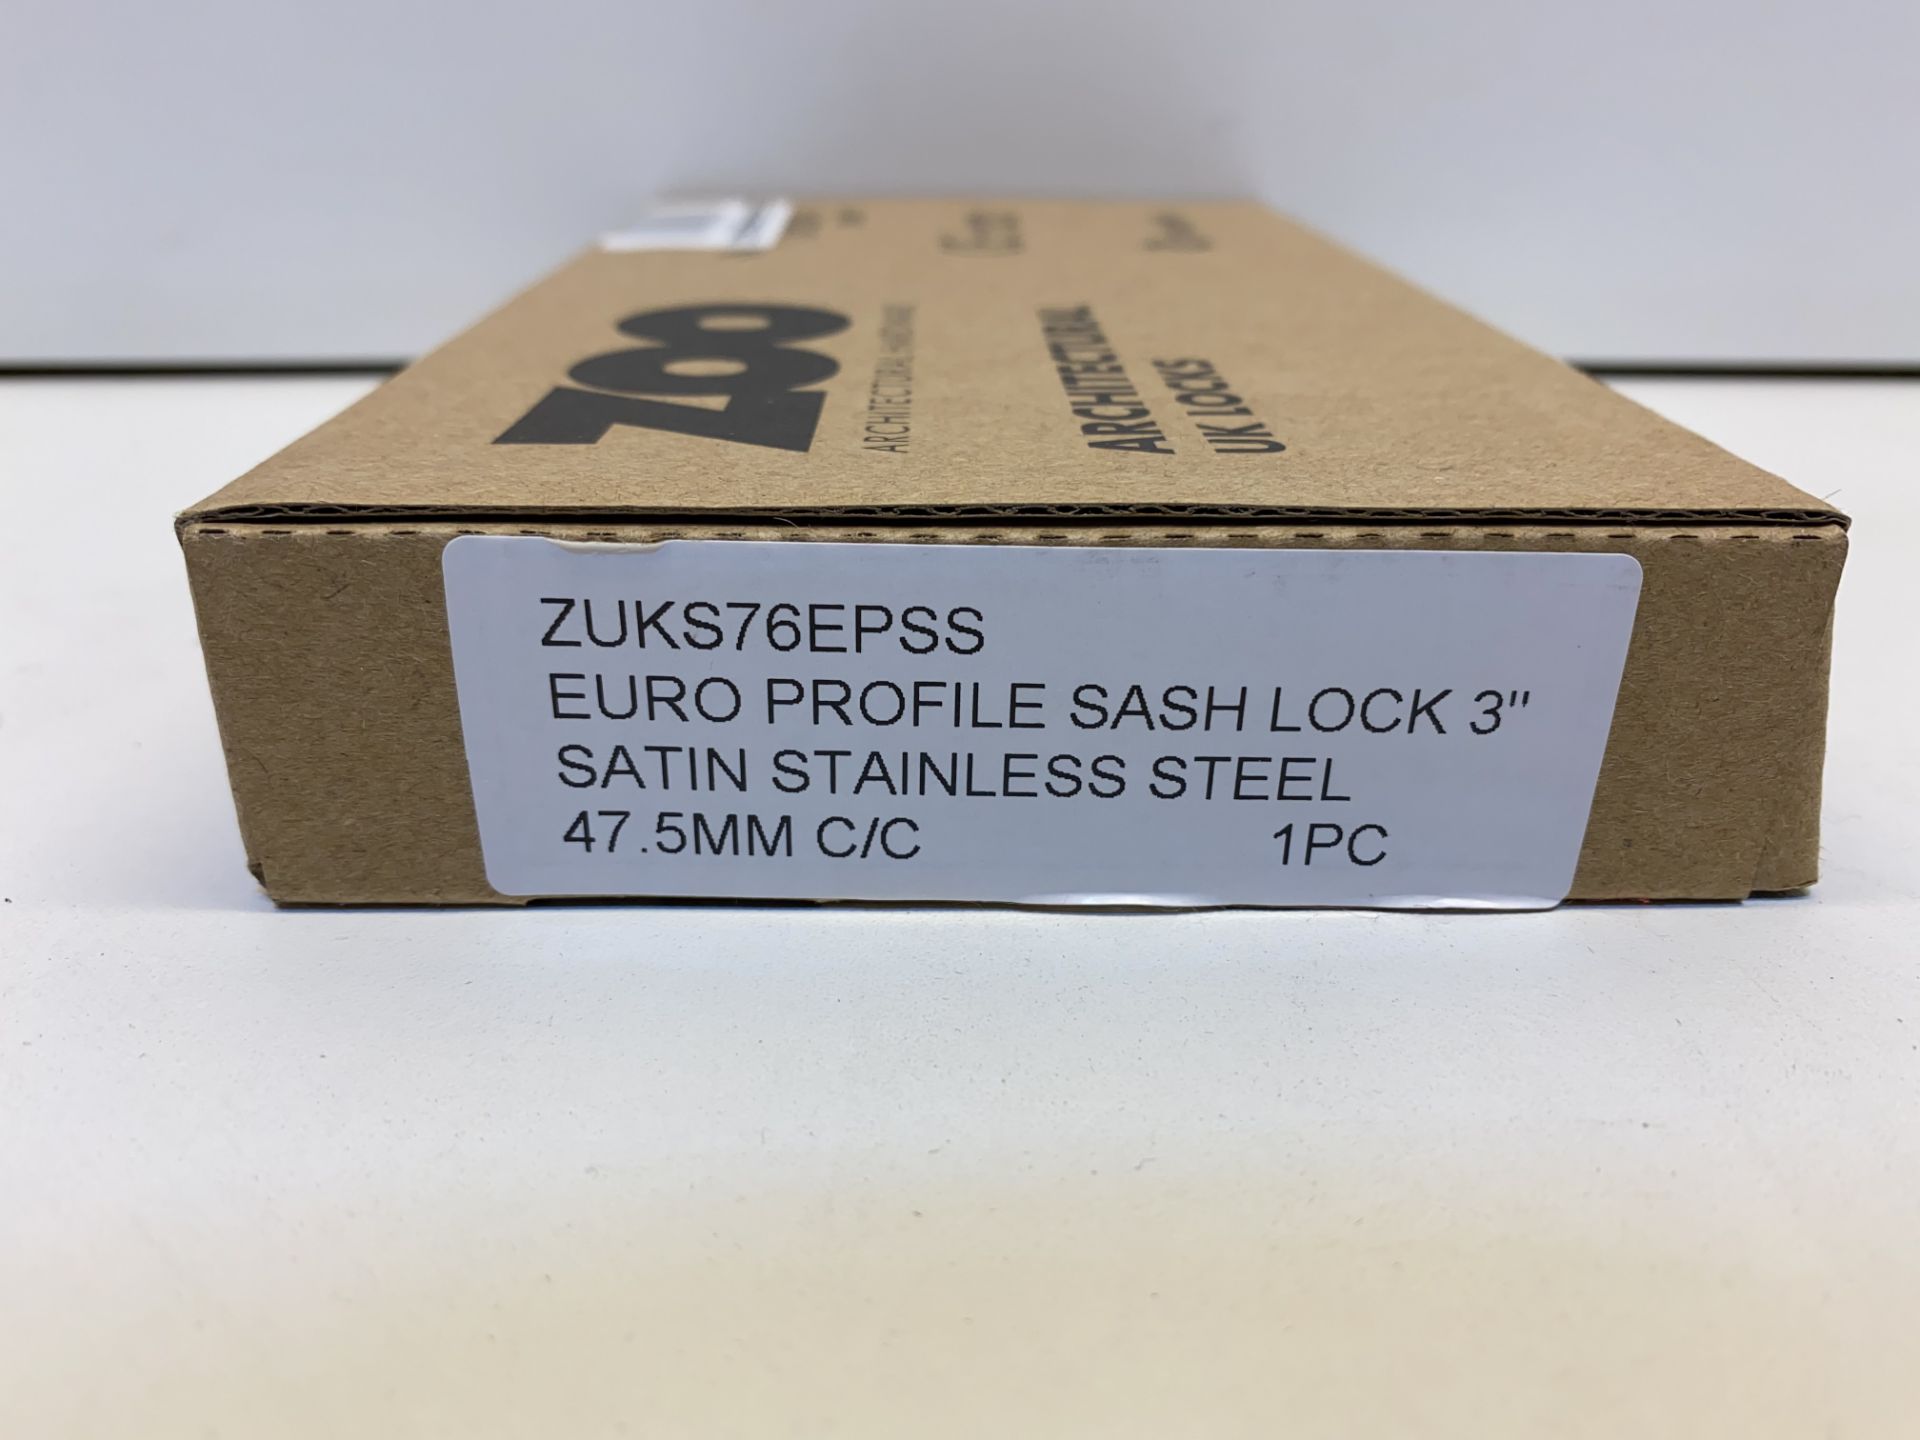 6 x Zoo Hardware Euro Profile Sash Lock | ZUKS76EPSS | Total RRP £59.76 - Image 3 of 5